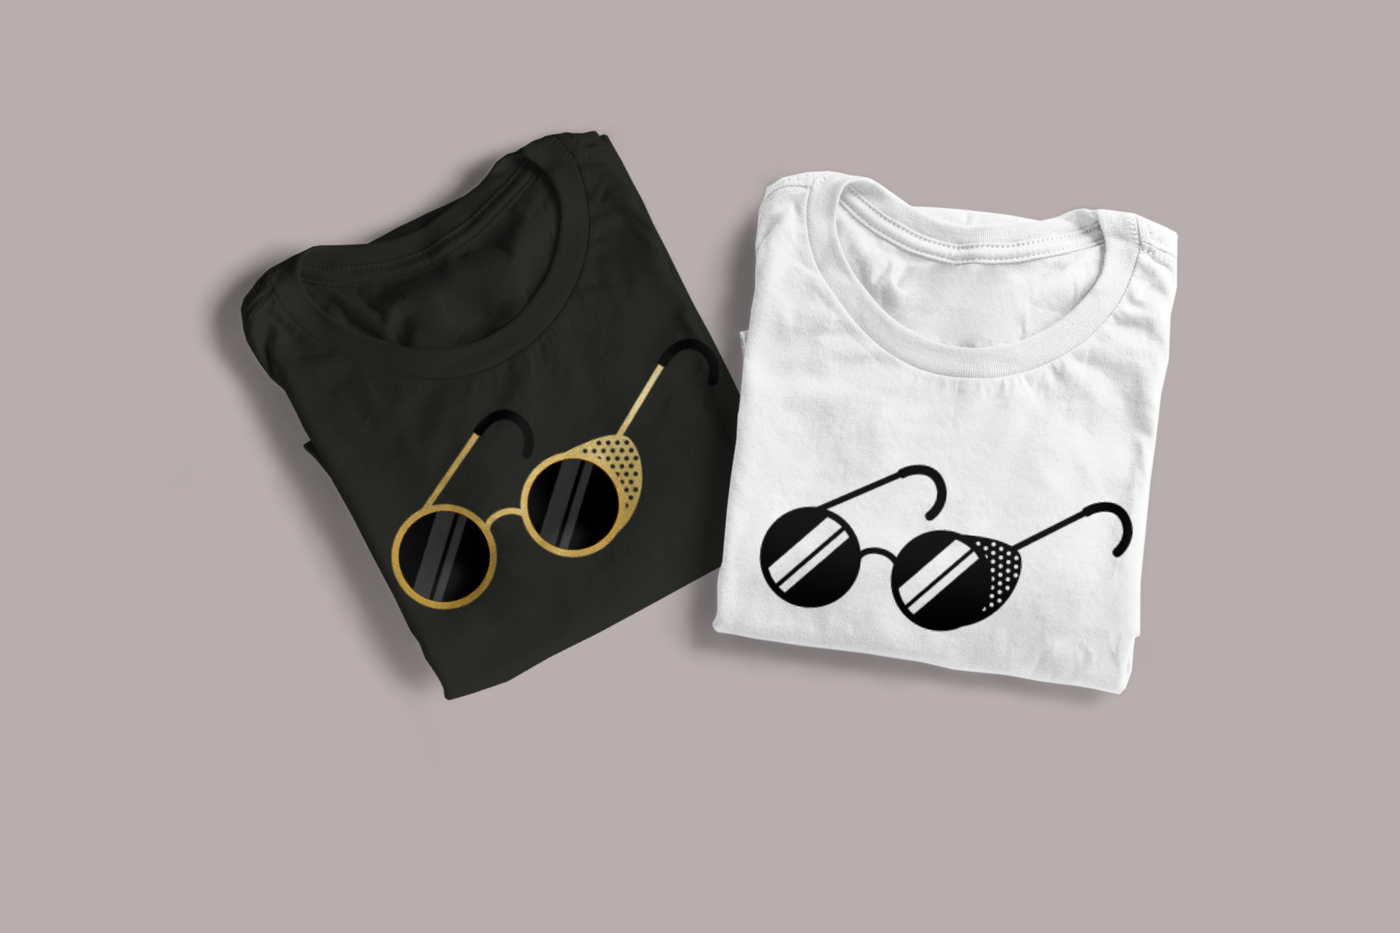 Steampunk sunglasses design